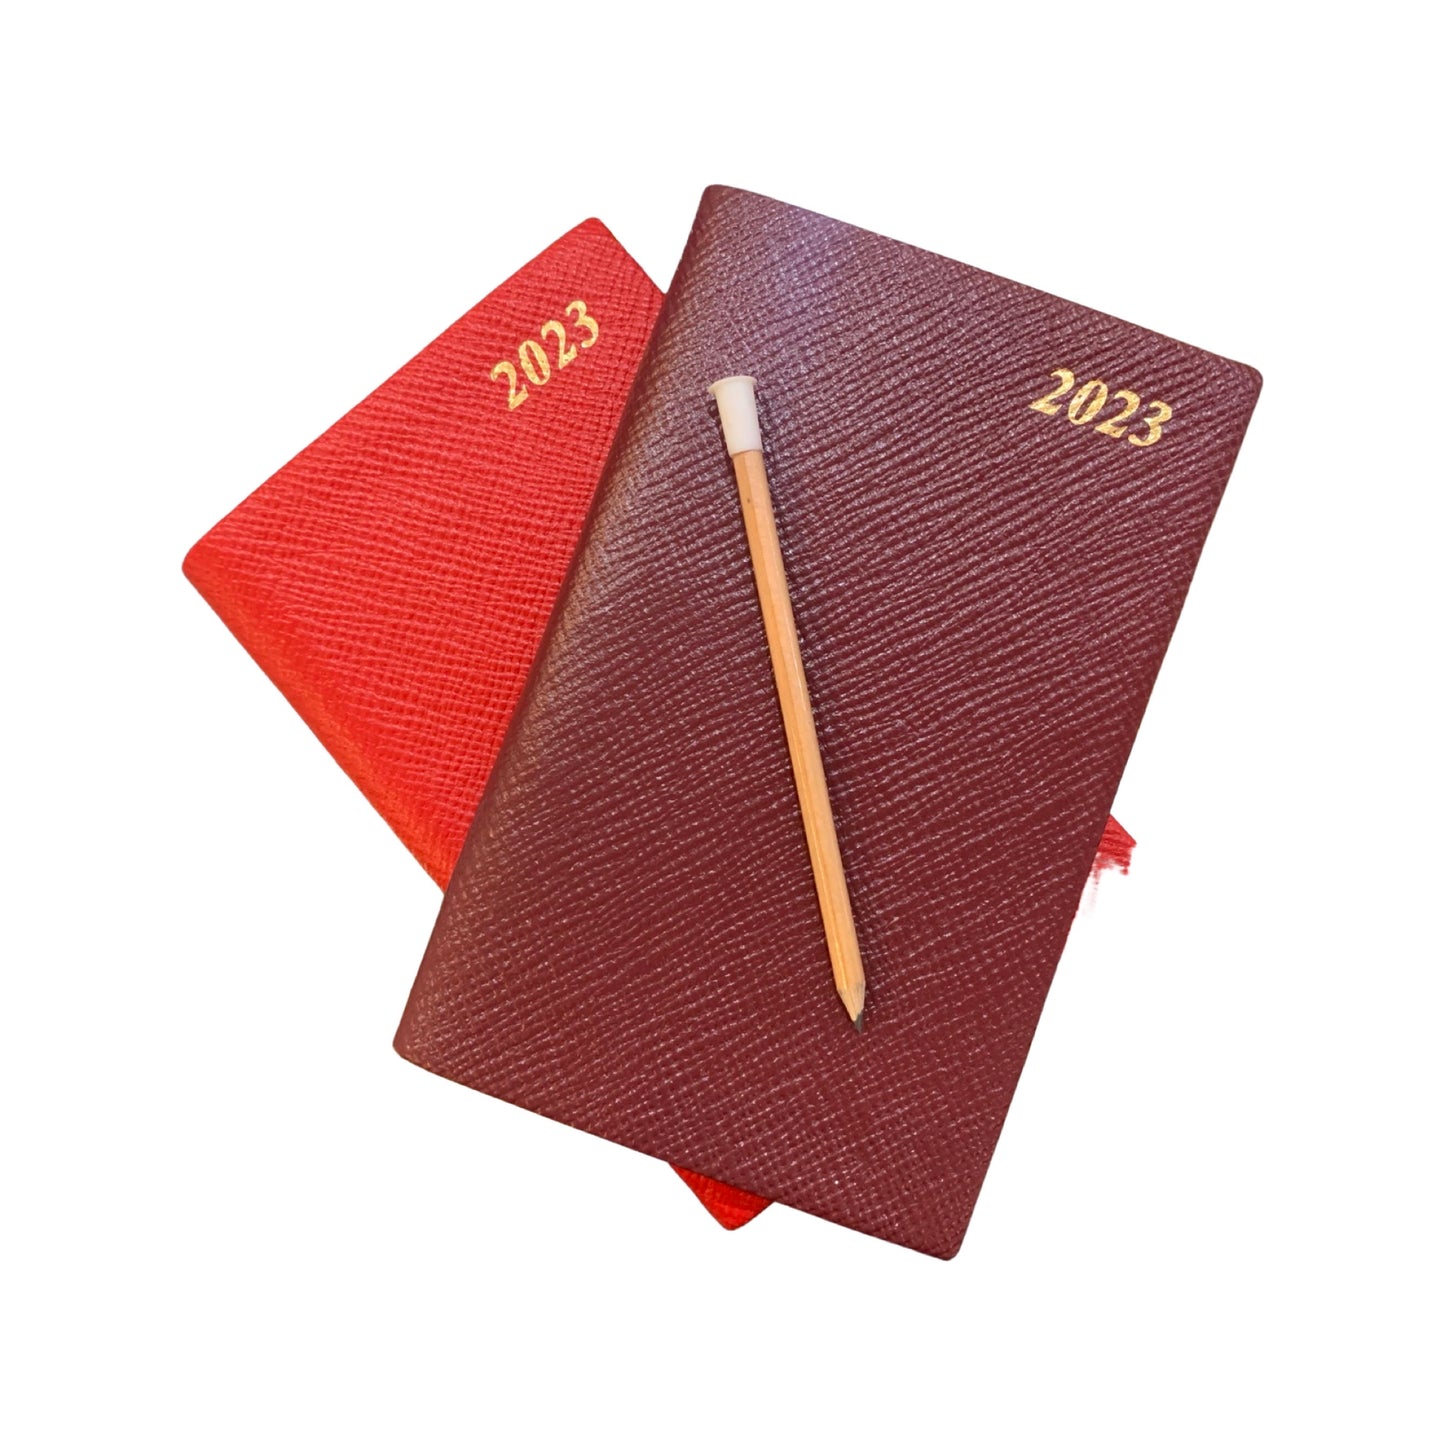 YEAR 2023 CROSSGRAIN Leather Pocket Calendar Book | 5 x 3" | Pencil in Spine | D753LJ